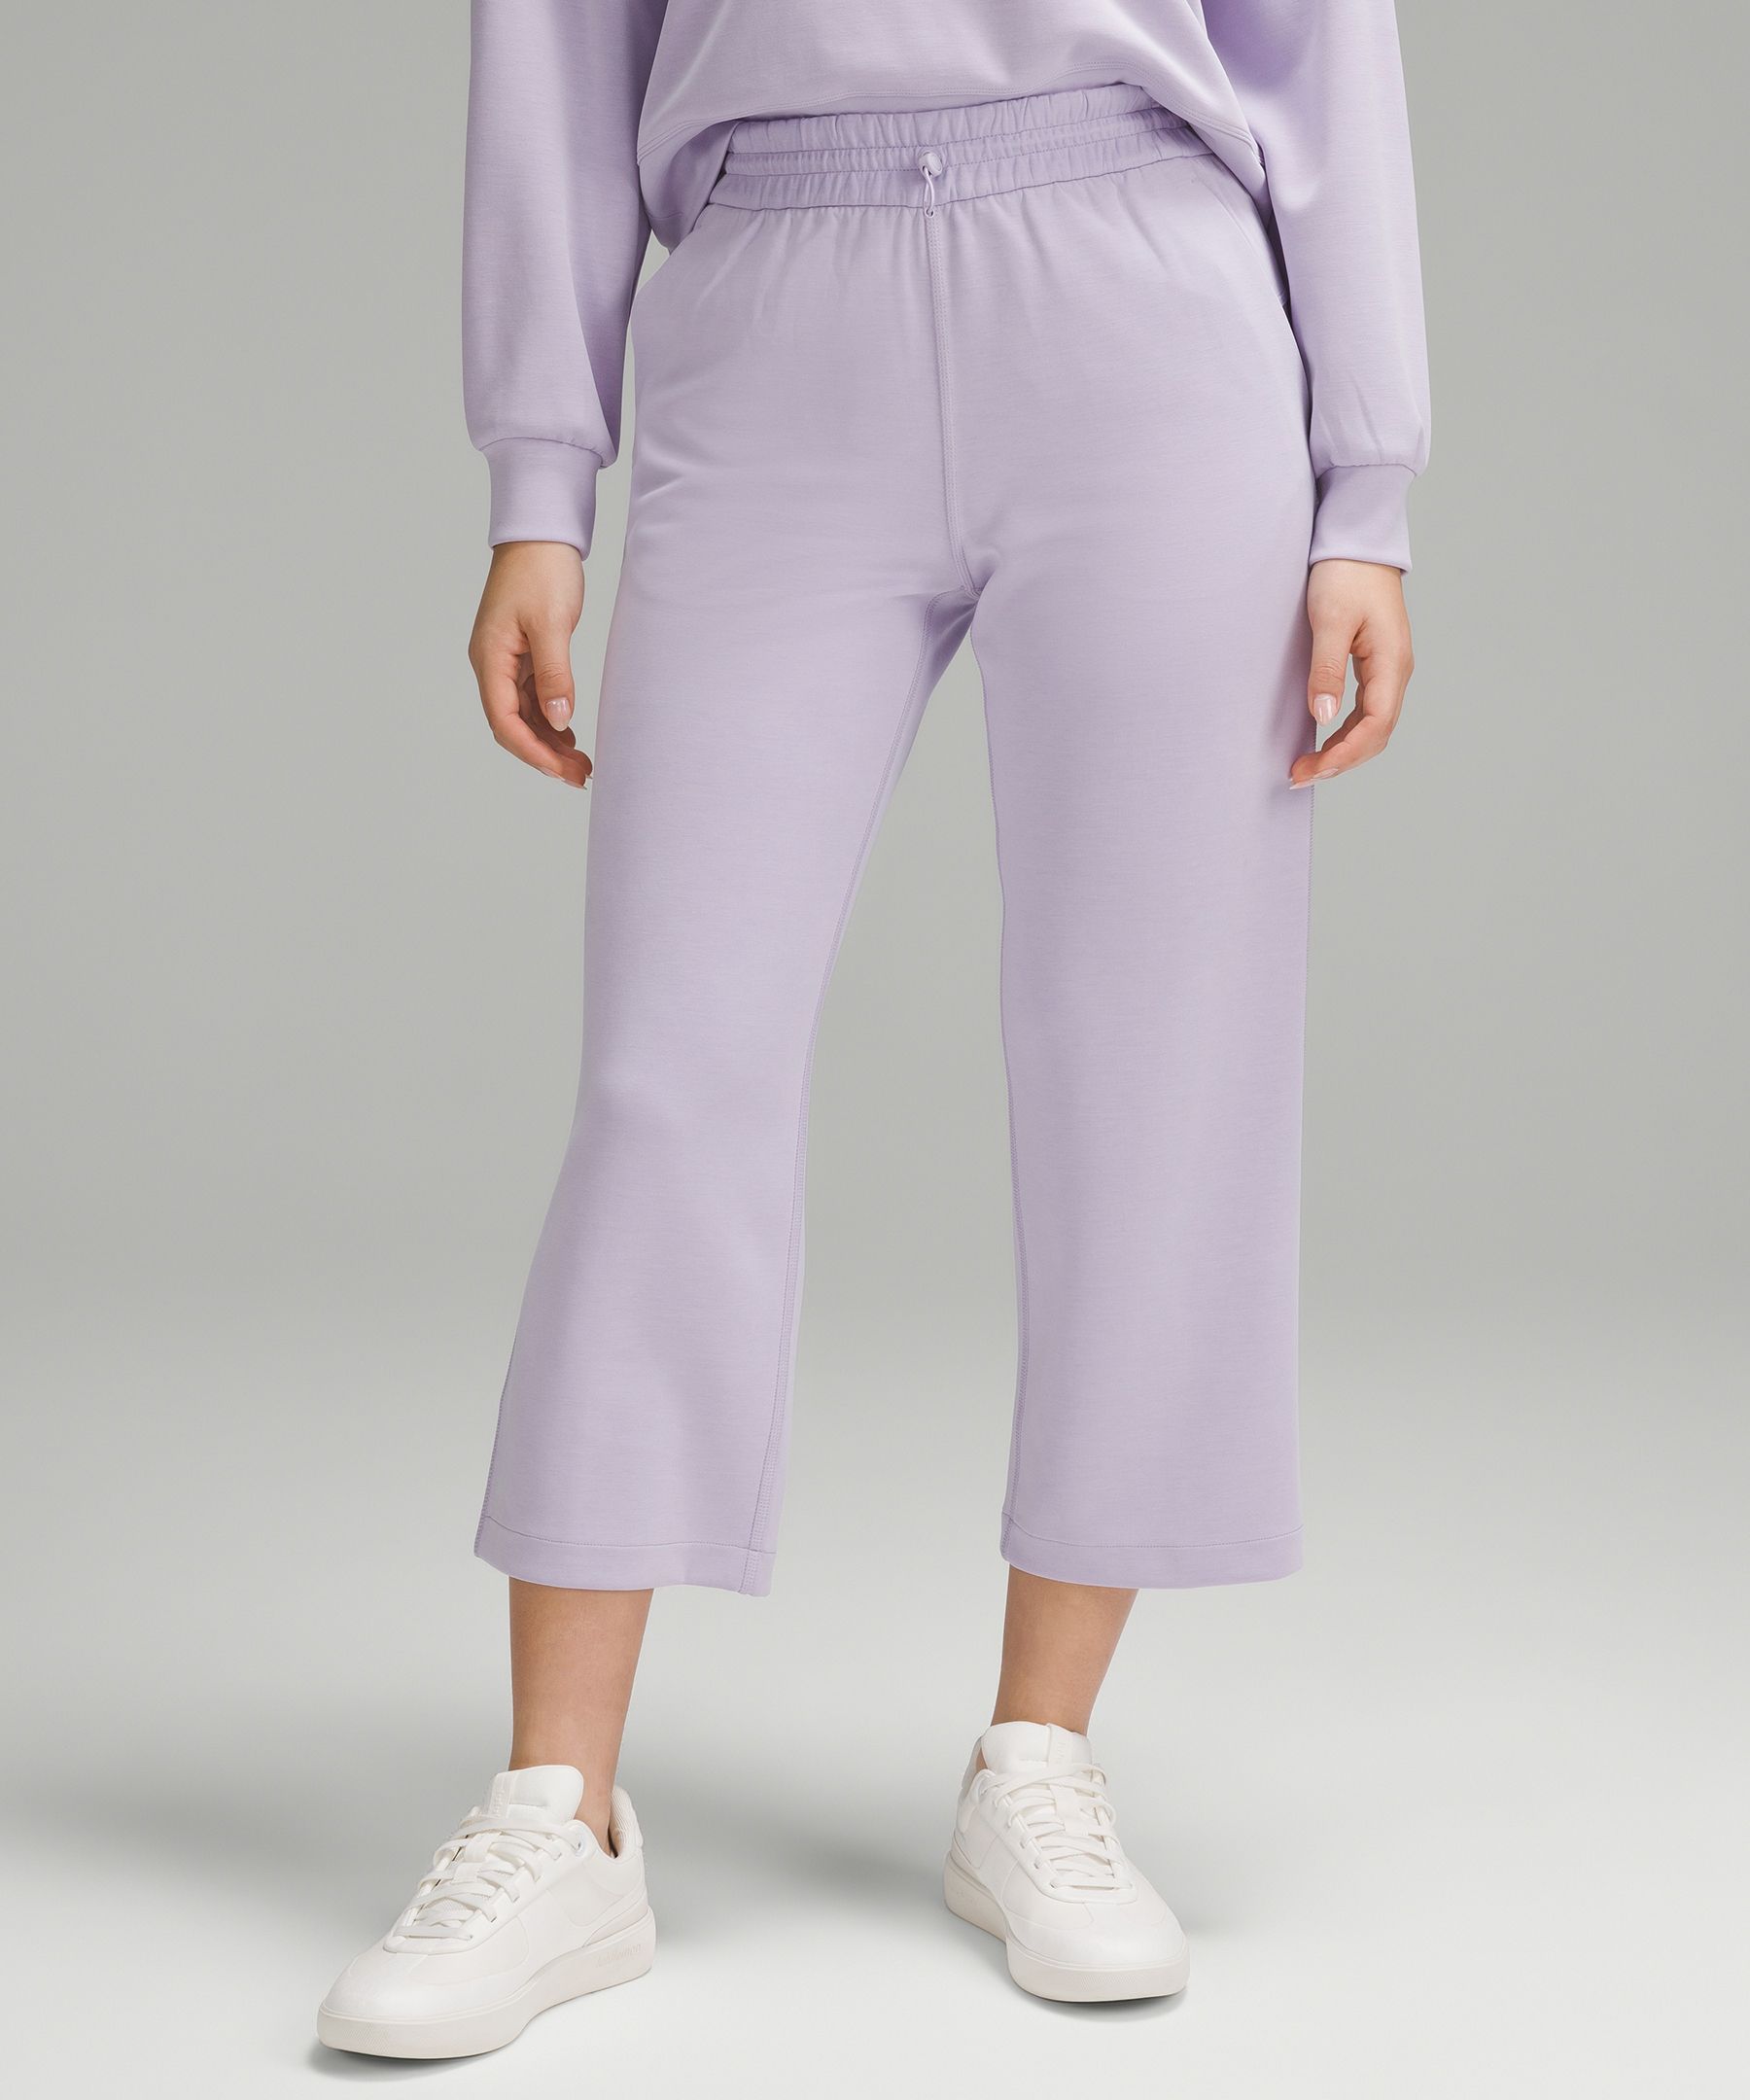 Lululemon Sweatshirt White Size 4 - $20 (83% Off Retail) - From brooke